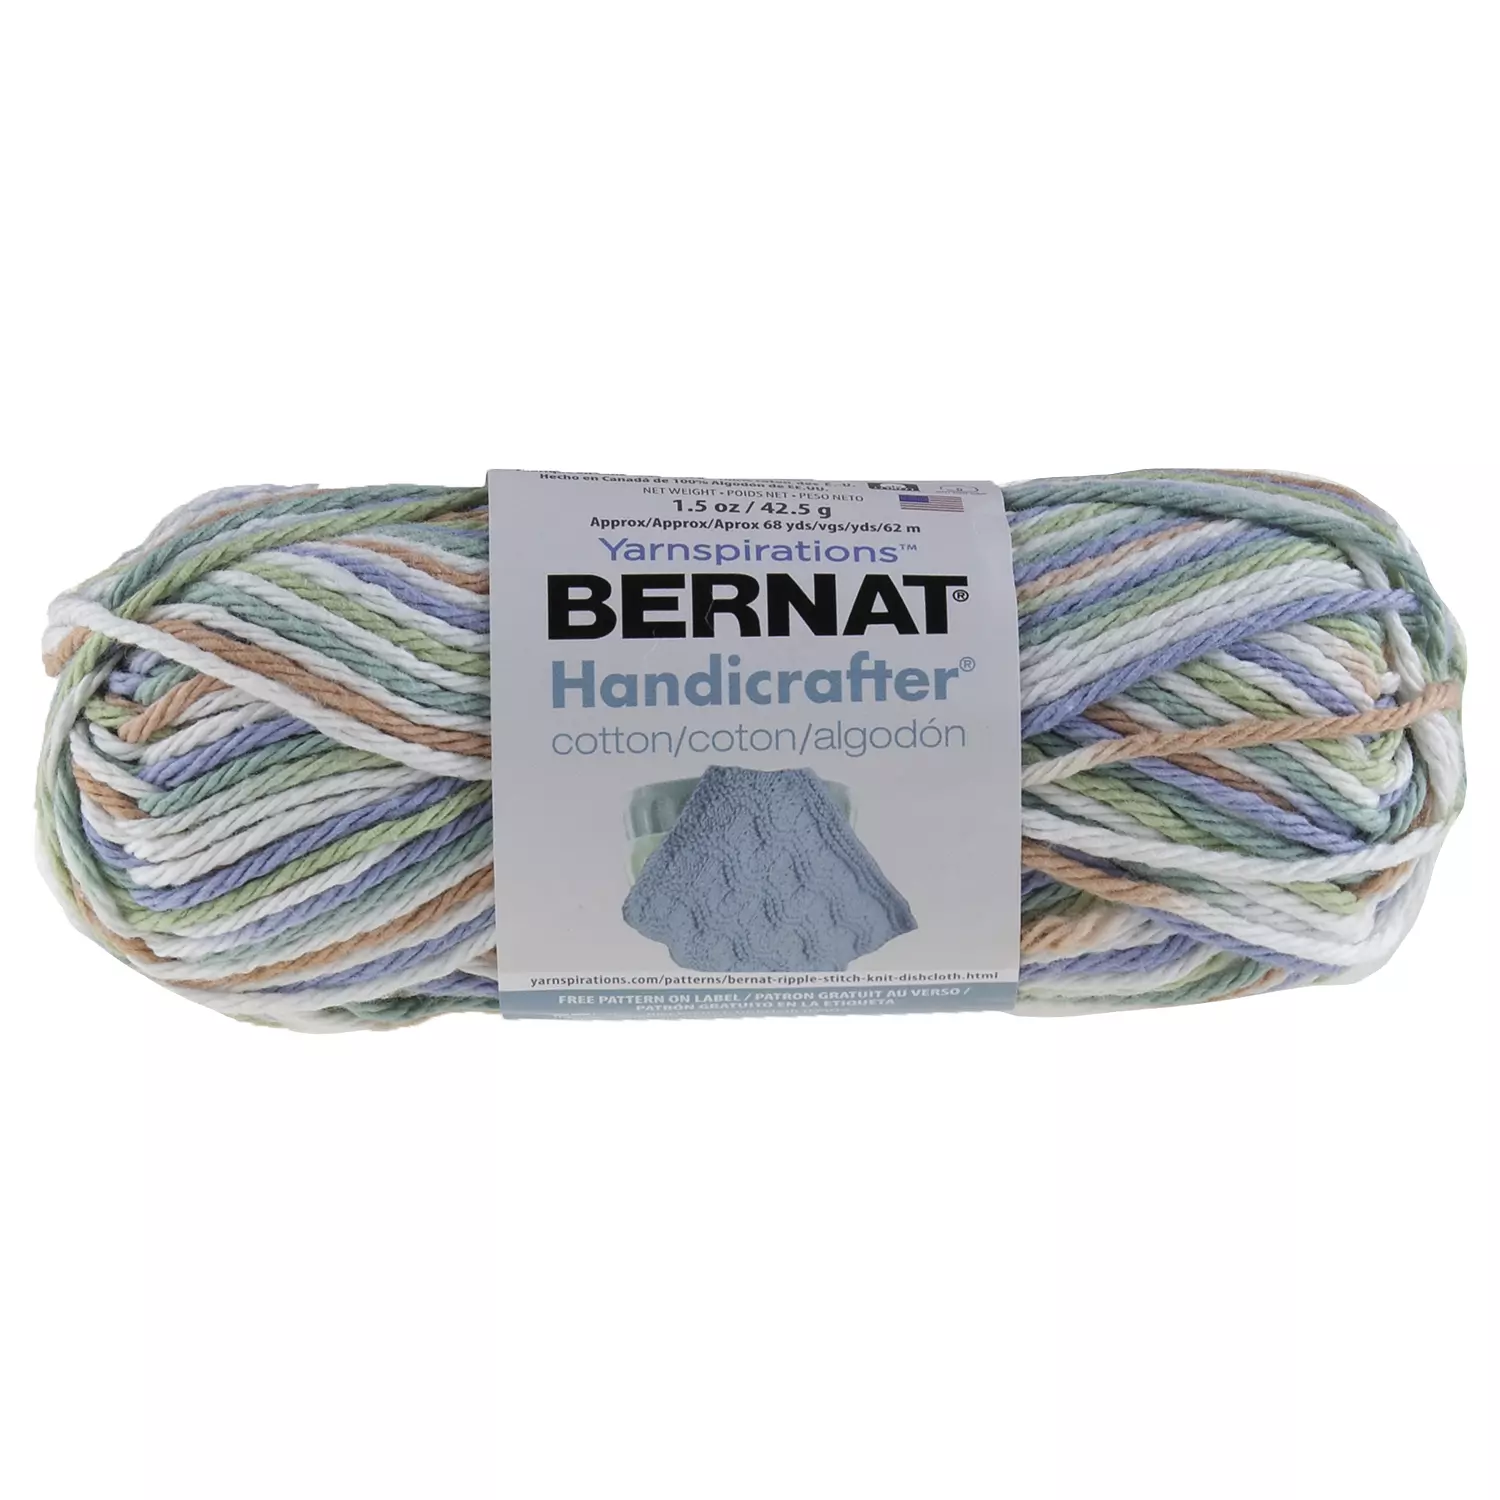 Bernat Handicrafter - Cotton yarn, stoneware ombre